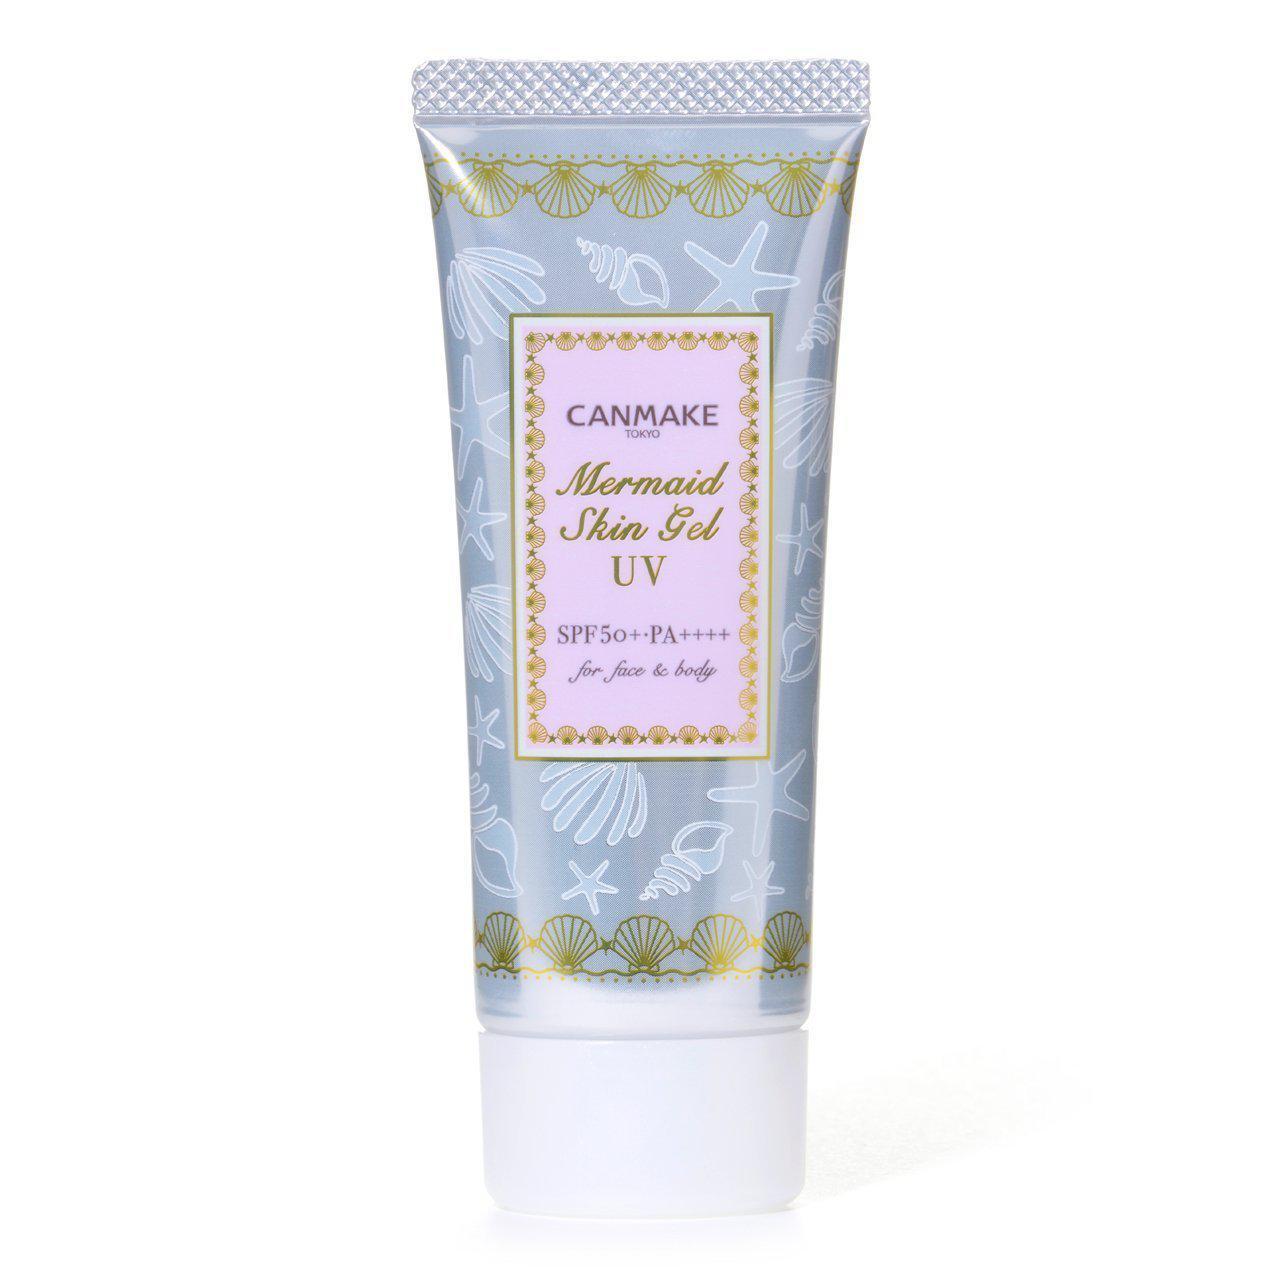 Canmake Mermaid Skin Gel UV Sunscreen SPF50+ PA++++ 40g - YOYO JAPAN